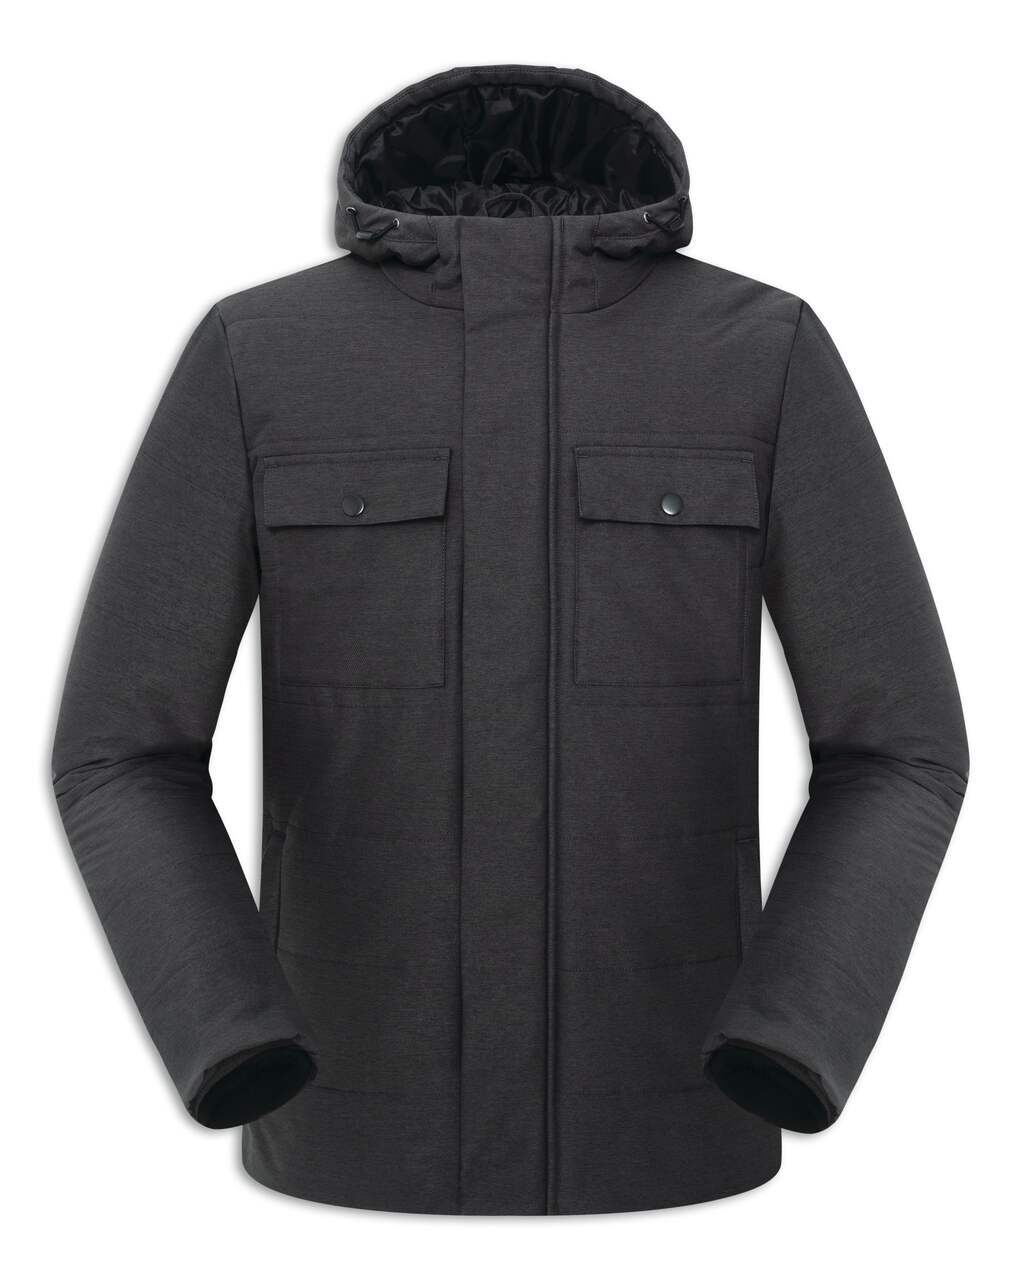 Outbound Men's Karst Thermal Fleece Full-Zip Jacket With Side Zipper  Pockets, Black